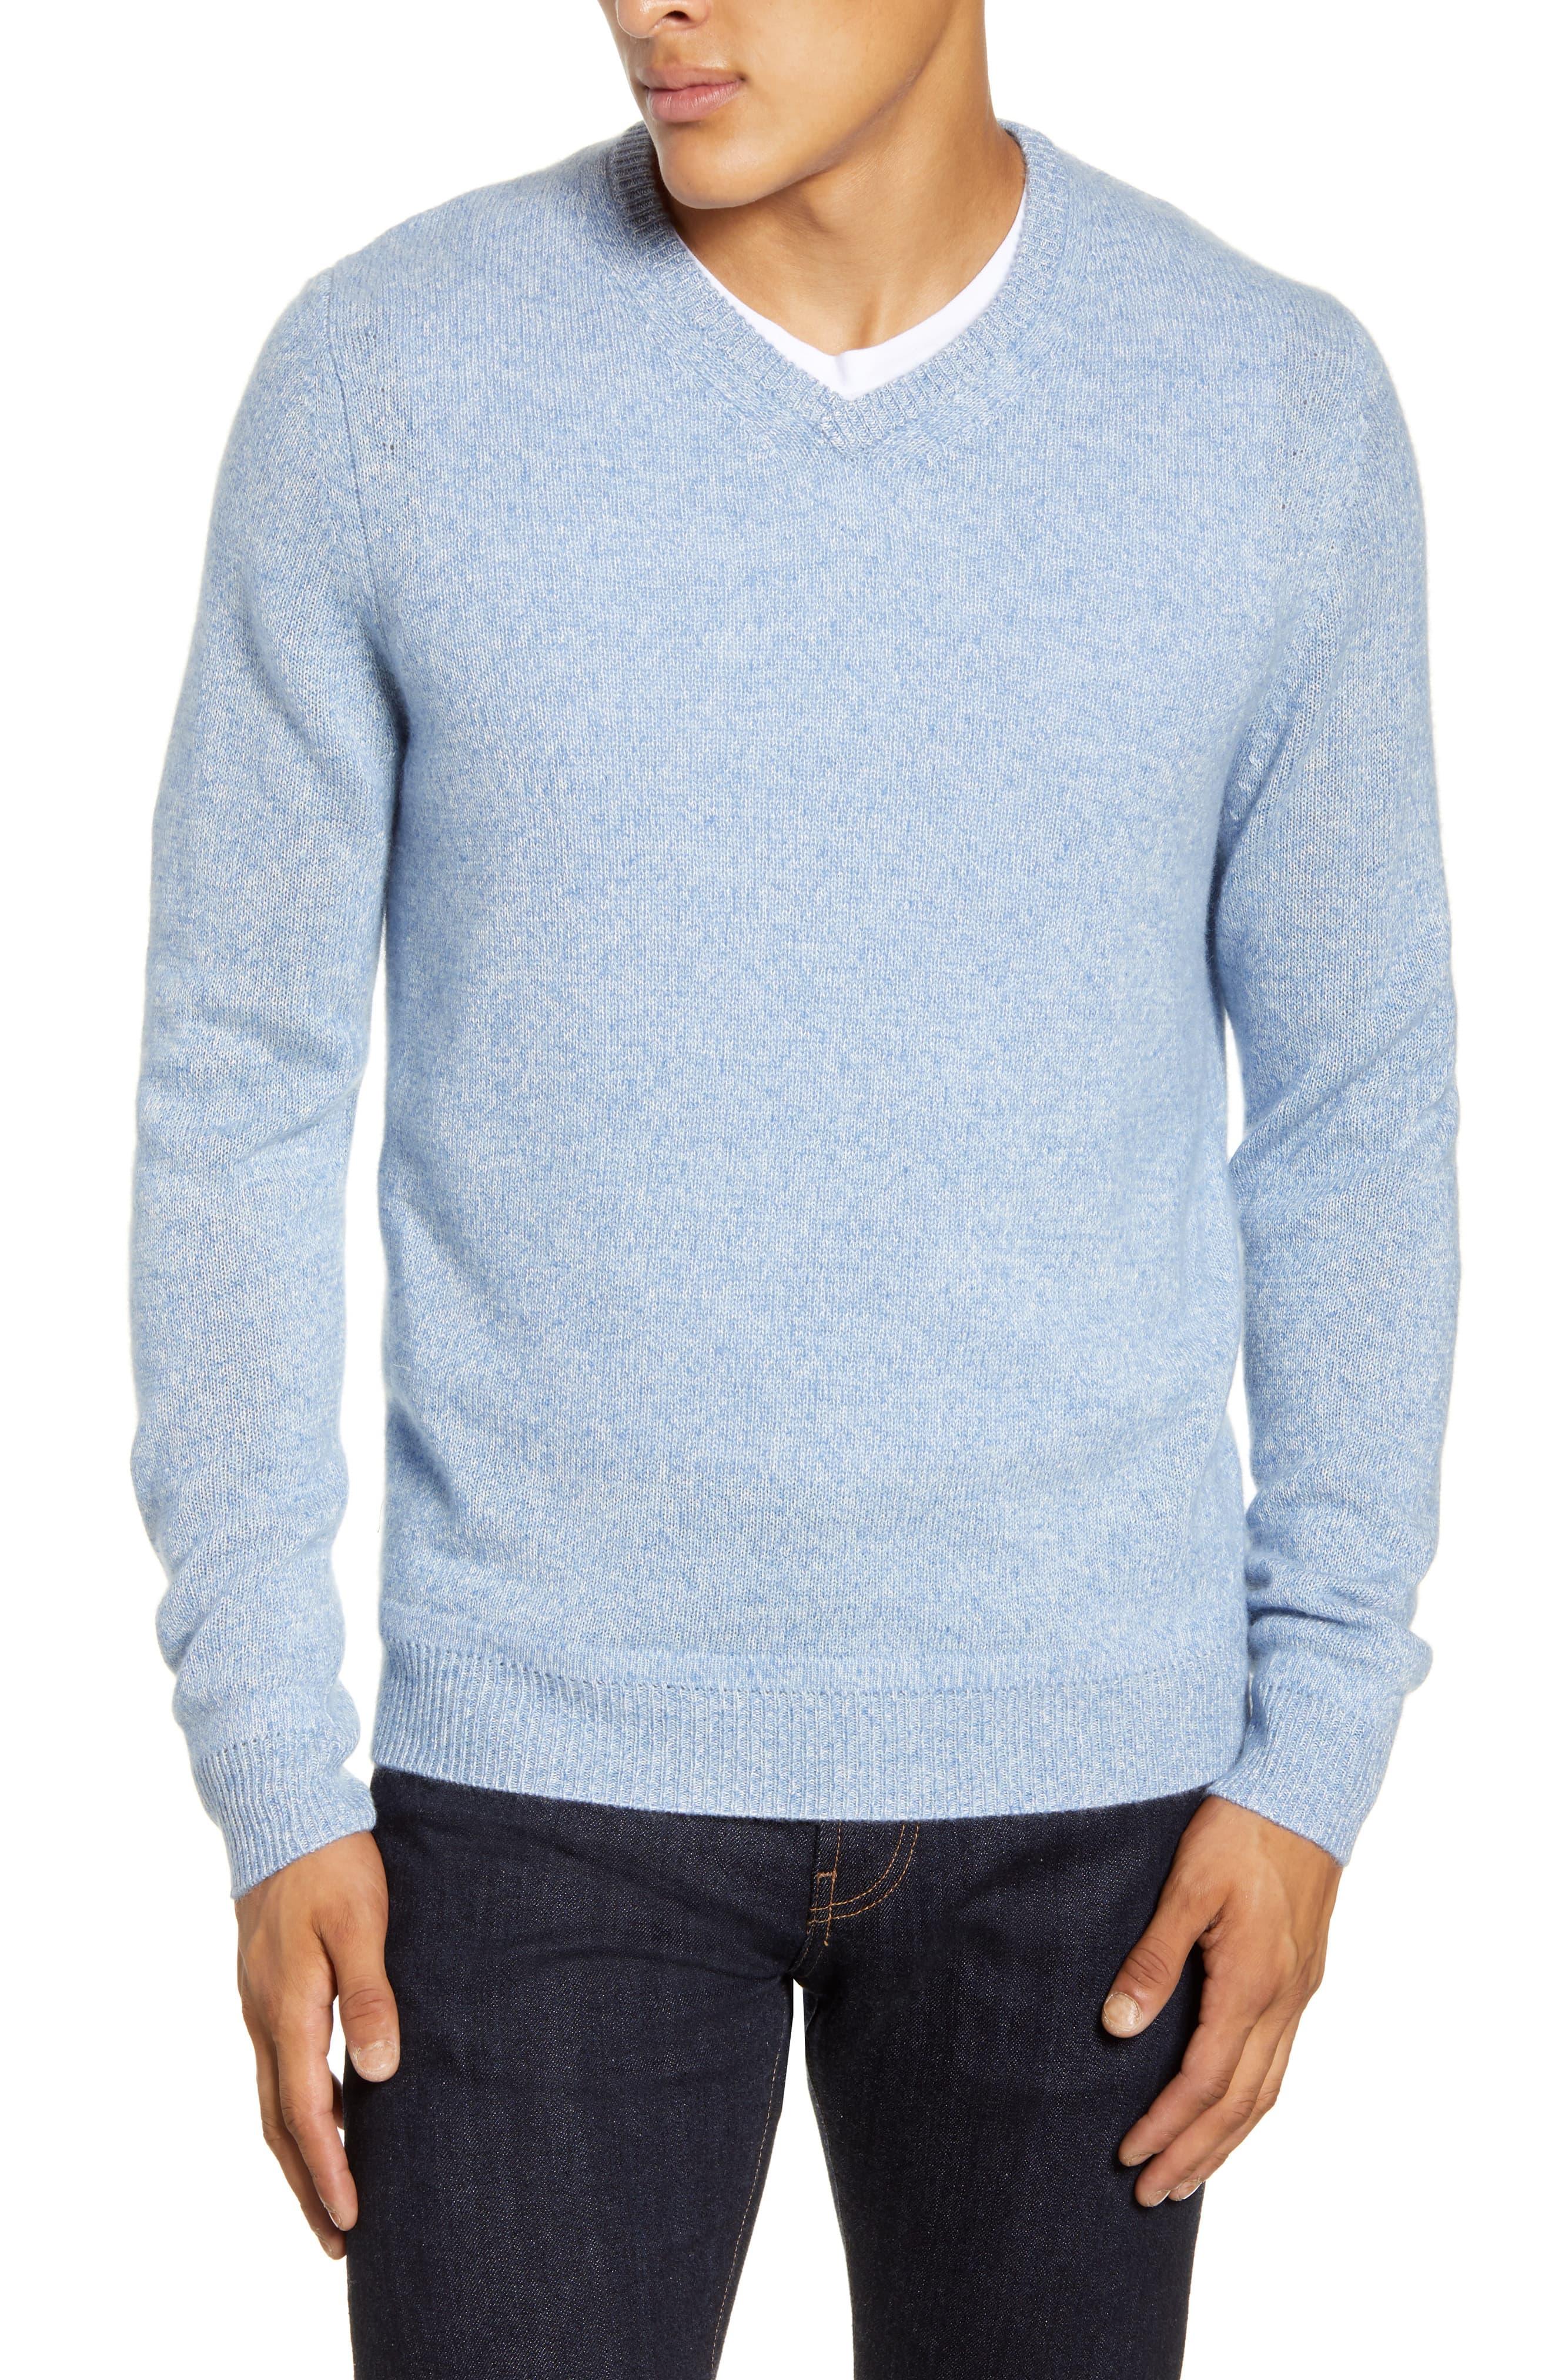 Nordstrom Cashmere & Silk V-neck Sweater in Blue for Men - Lyst